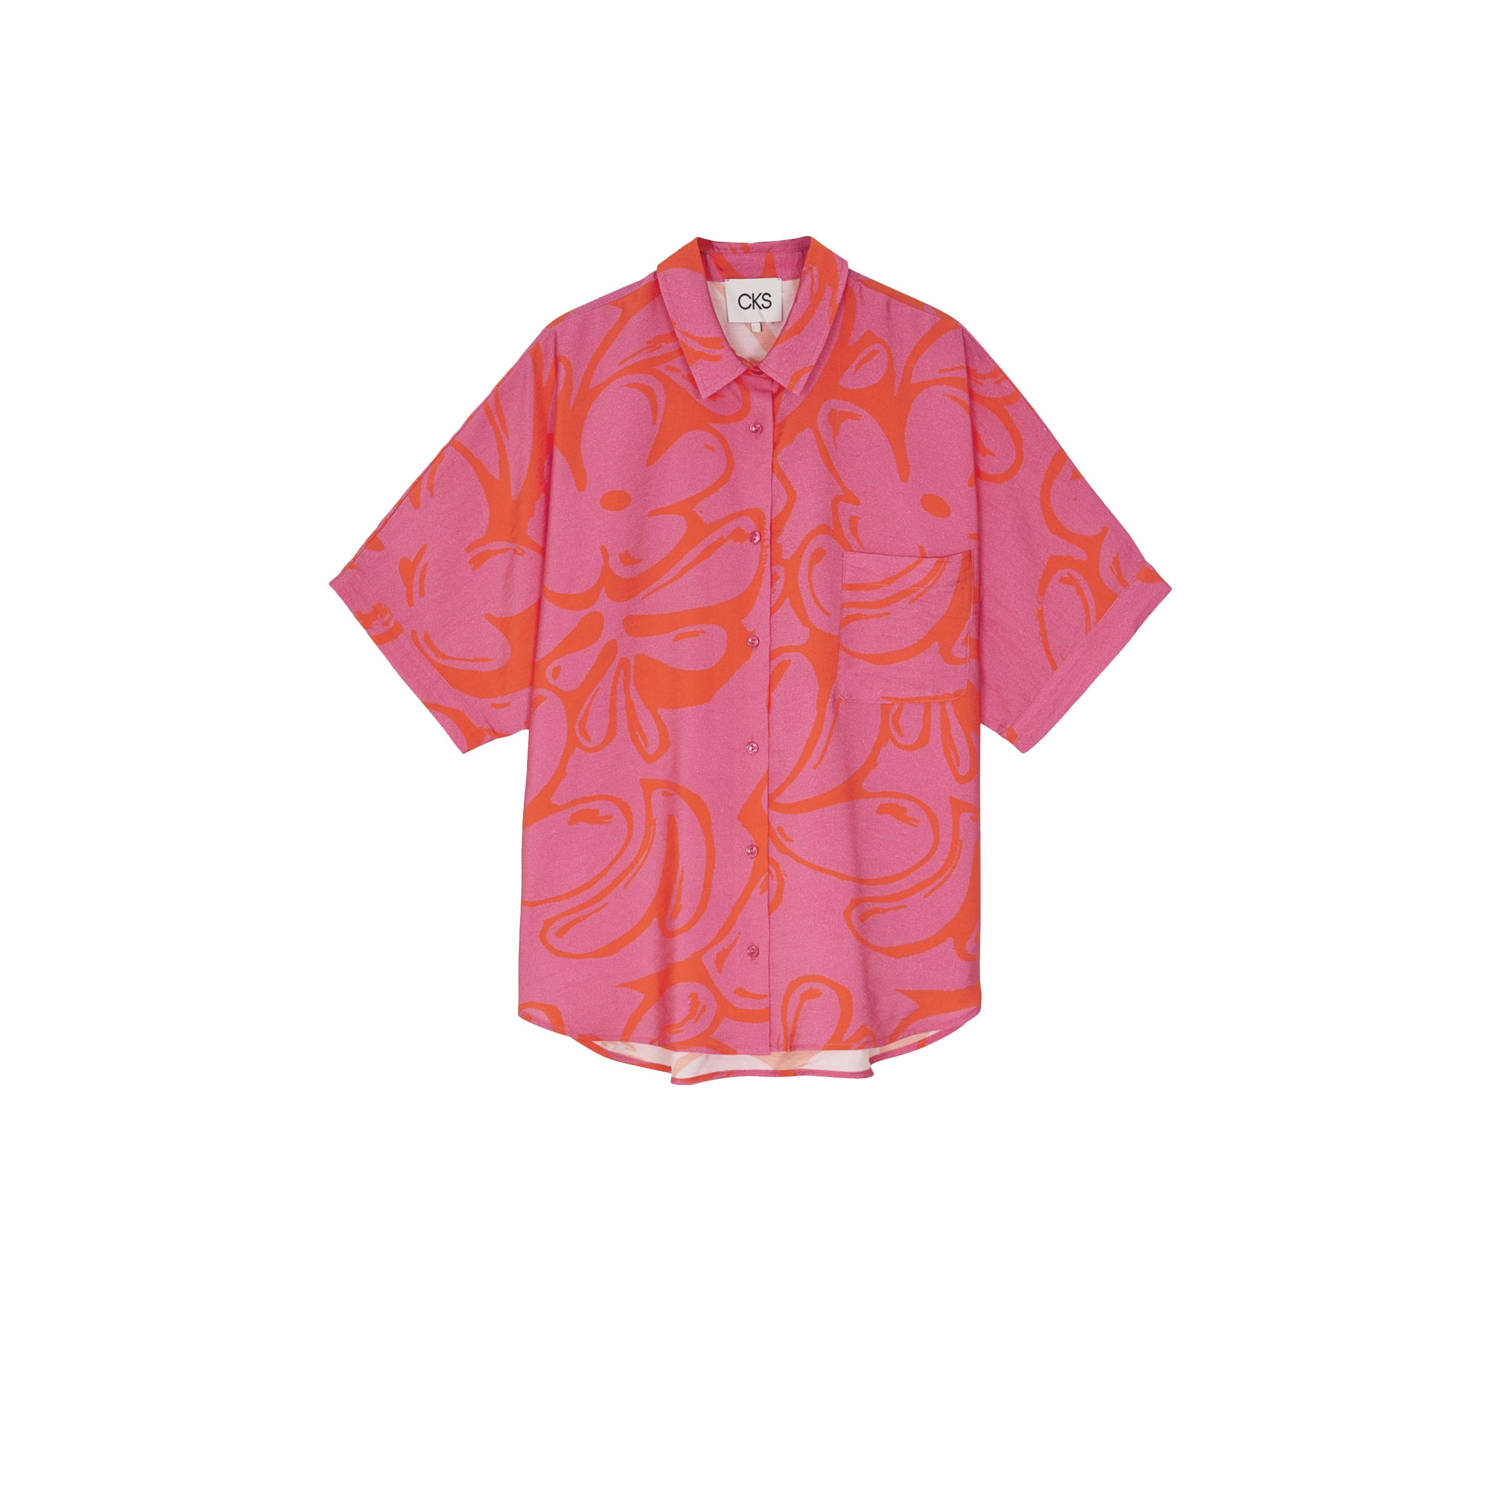 CKS blouse met all over print roze rood